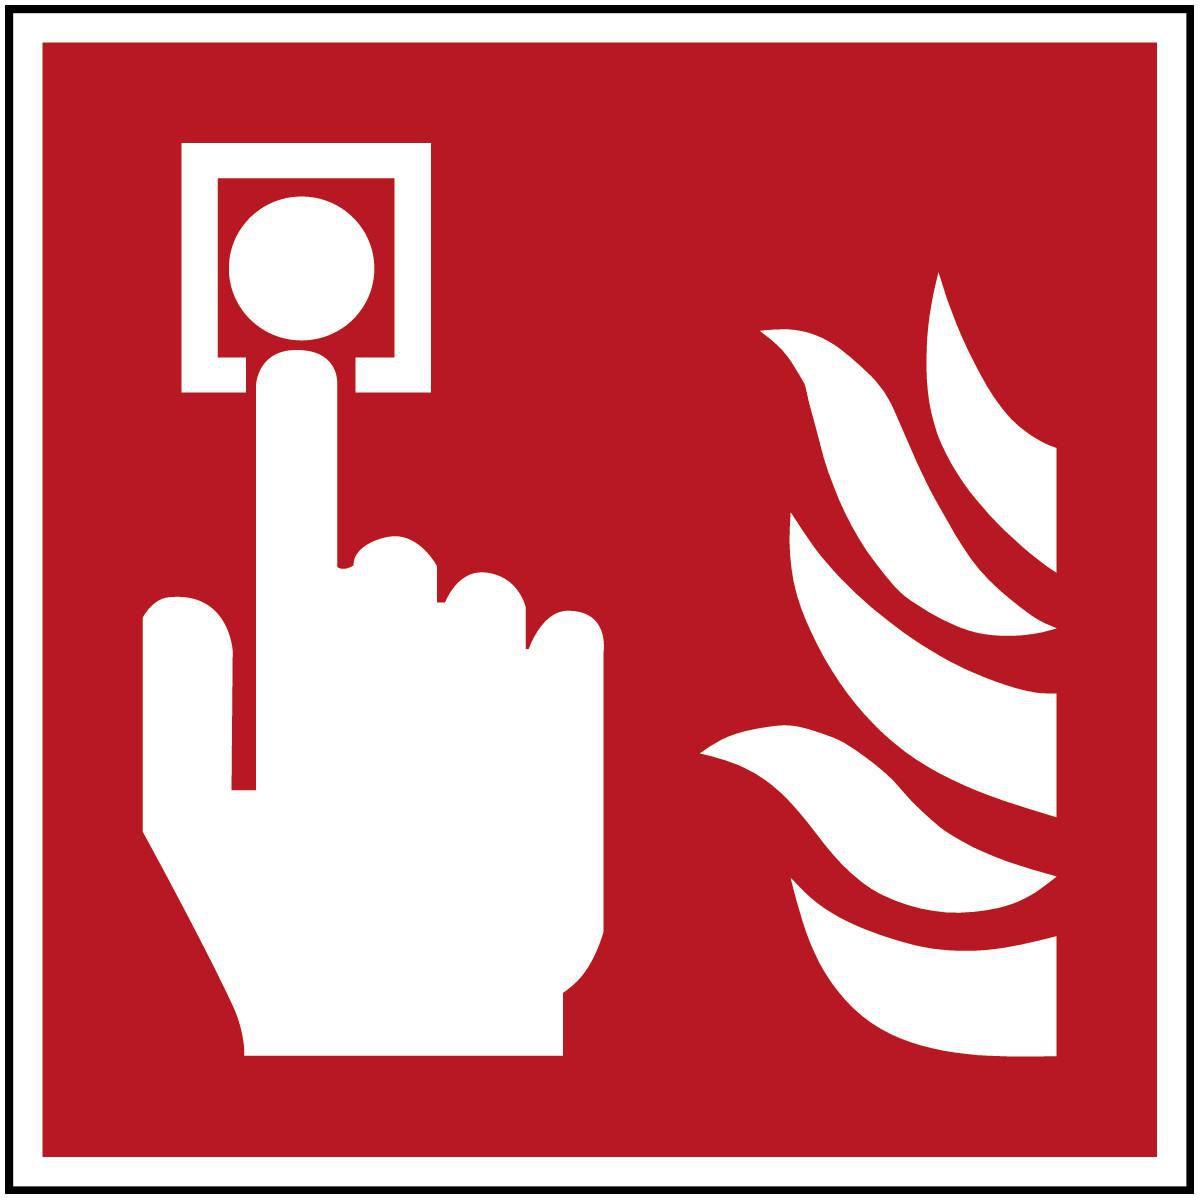 Brady PIC F005-200X200-AL-CRD1 W128397690 ISO Safety Sign - Fire alarm 